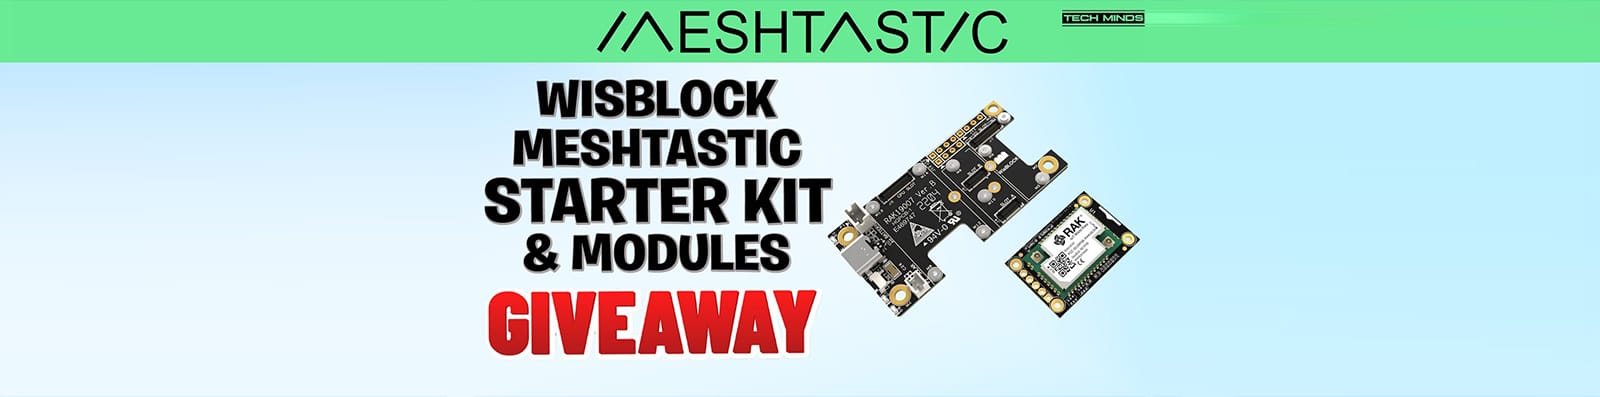 WisBlock Meshtastic Starter Kit